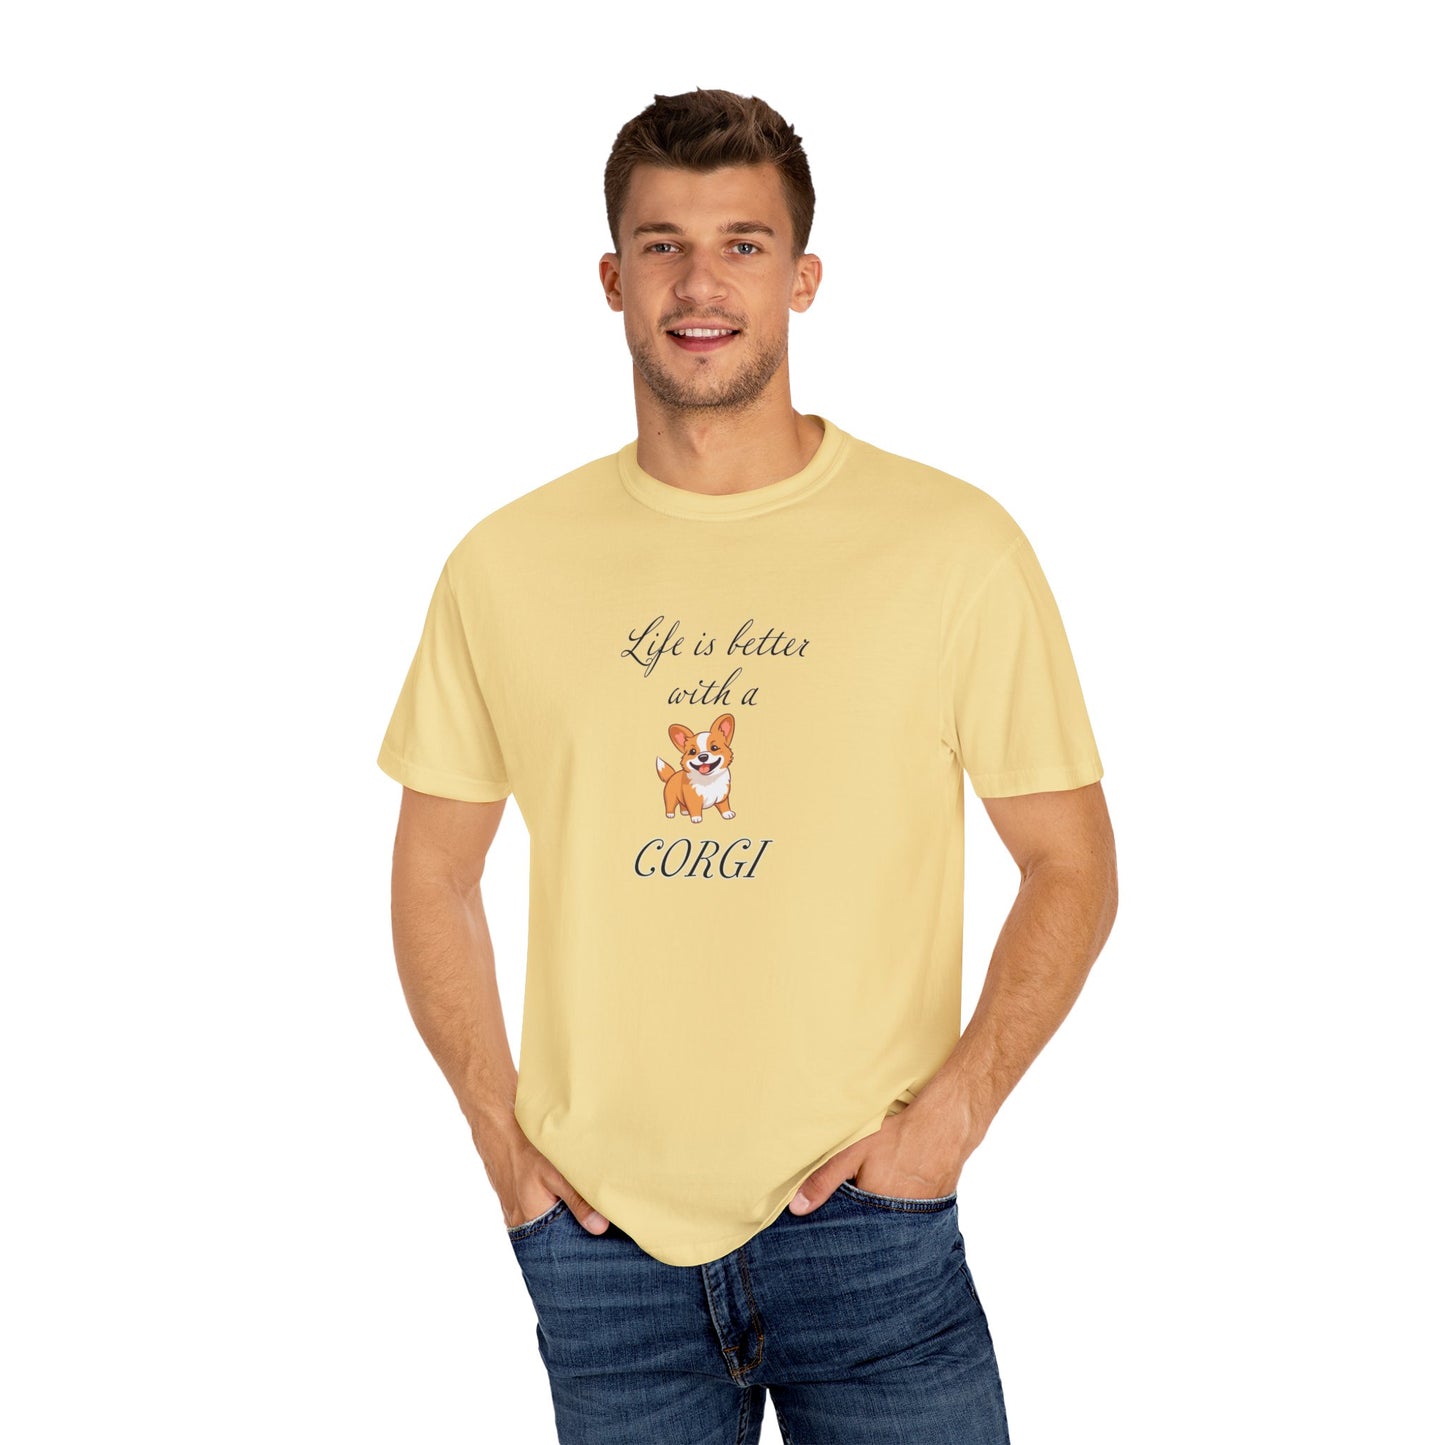 Life is Better with a Corgi Tshirt - Unisex Garment-Dyed T-shirt